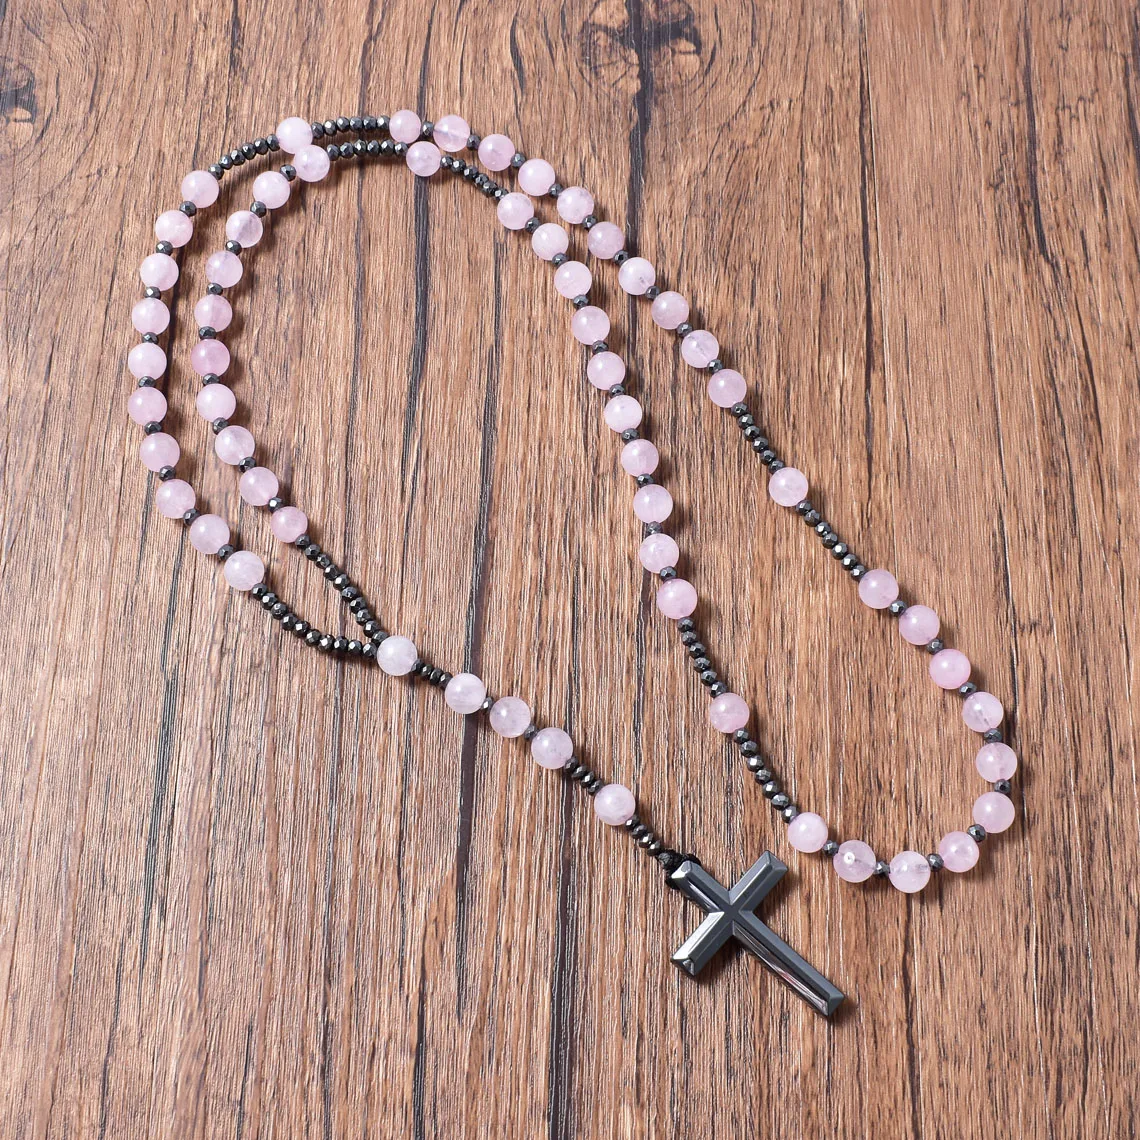 Natural Rose Quartz Hematite Cross Pendant Stone Protection Catholic Gifts Christian Jewelry Religious Rosary Meditation Mala